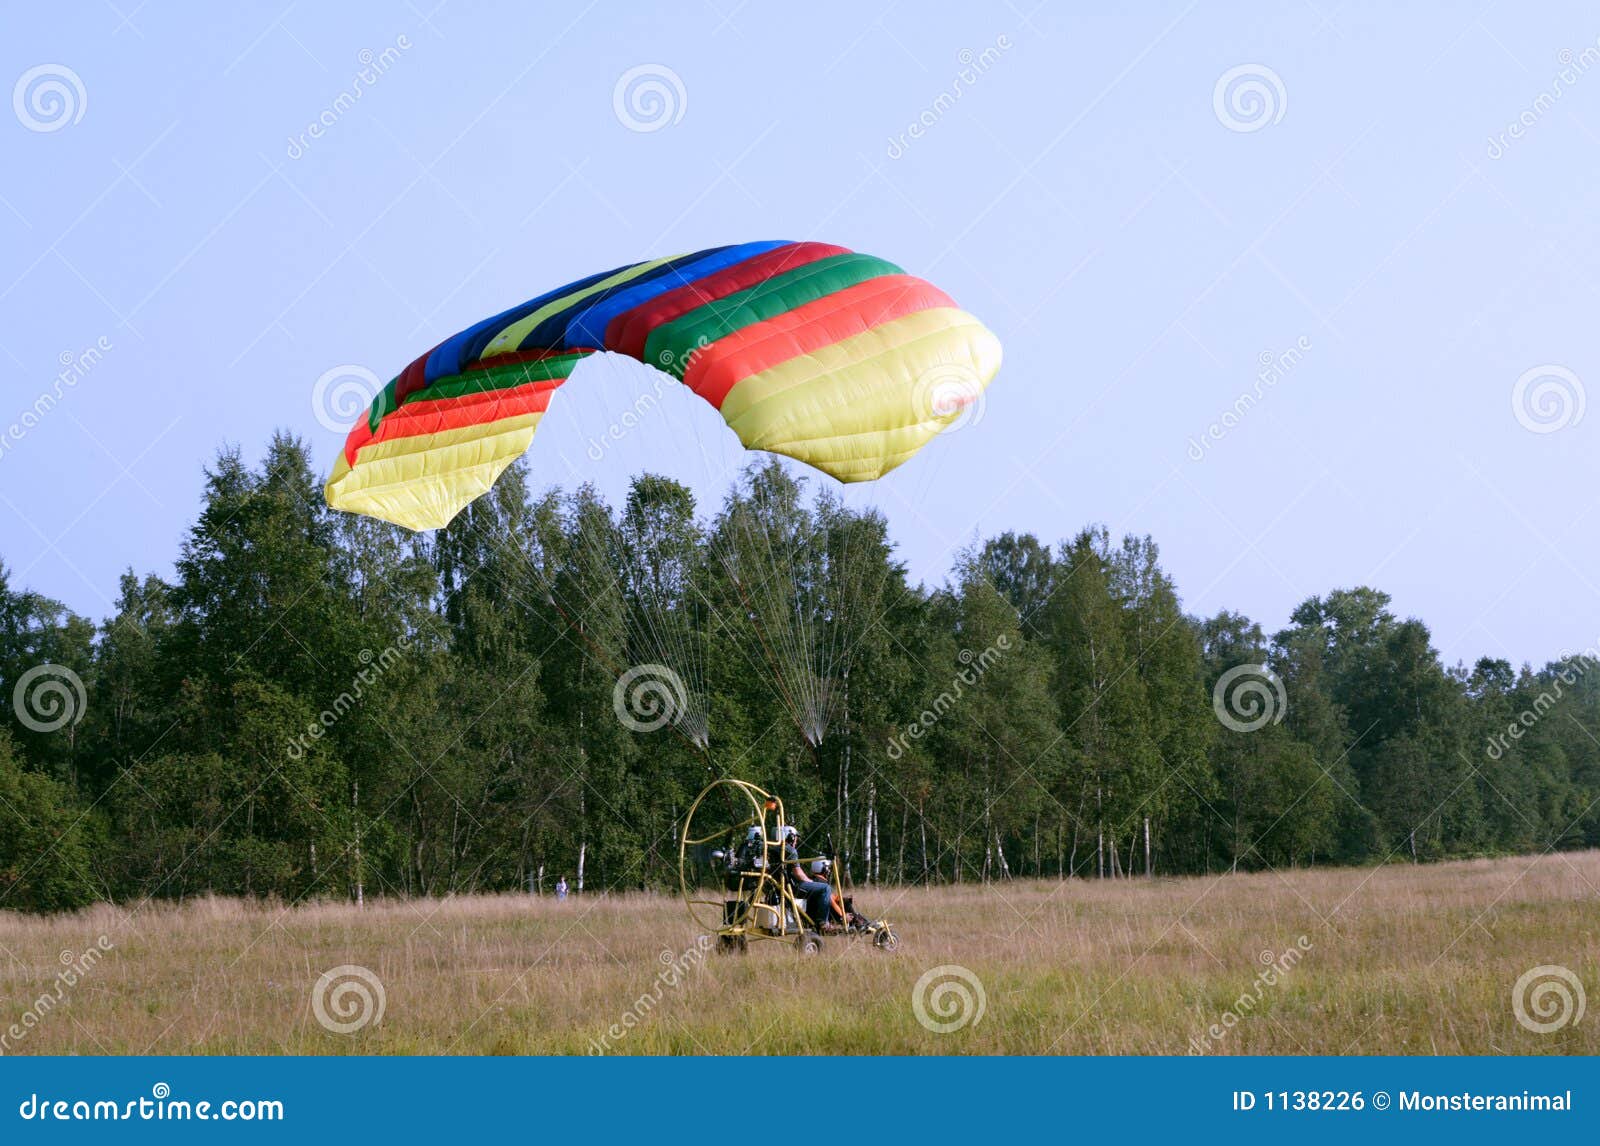 starting paraglider